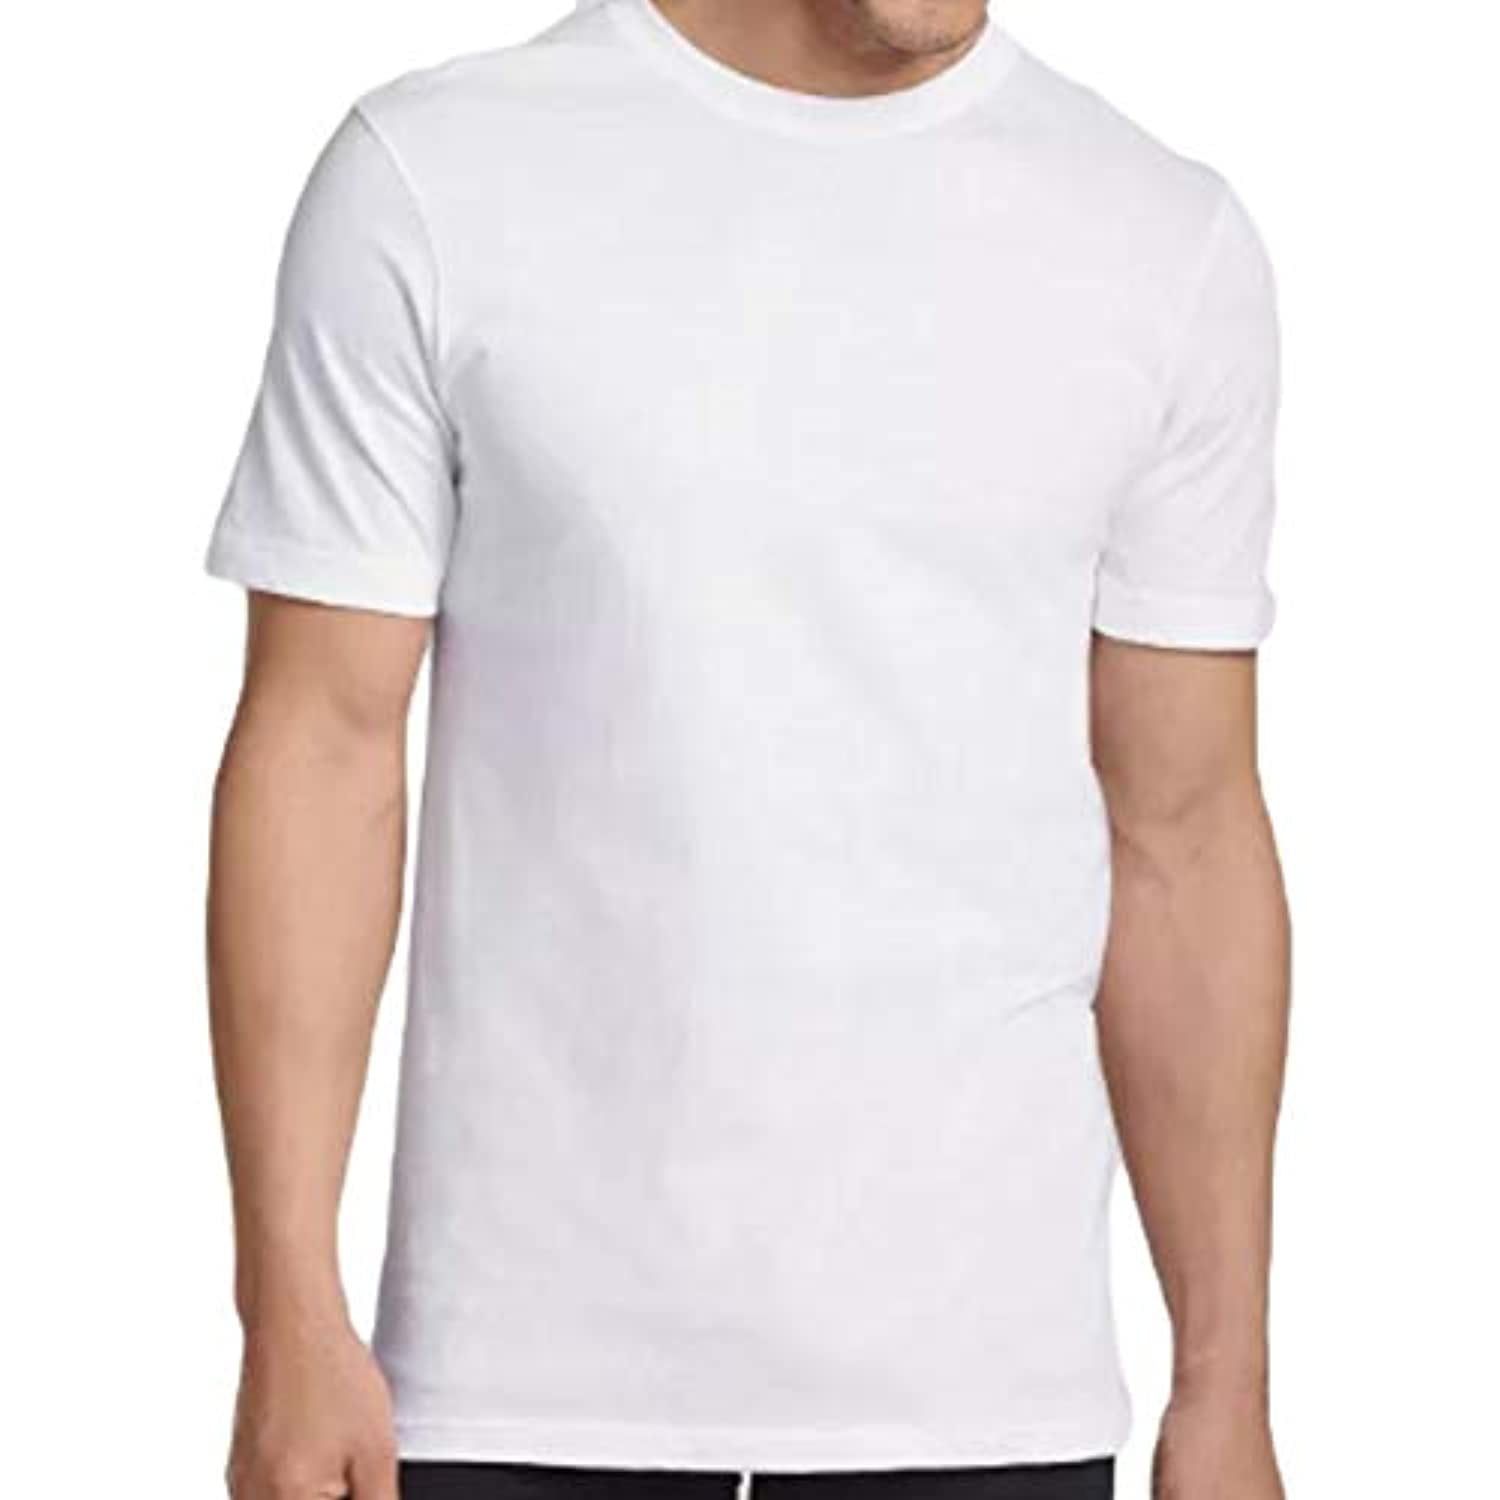 Jockey Generation Men's Stay New Cotton 3pk Crew Neck T-Shirt - White ...